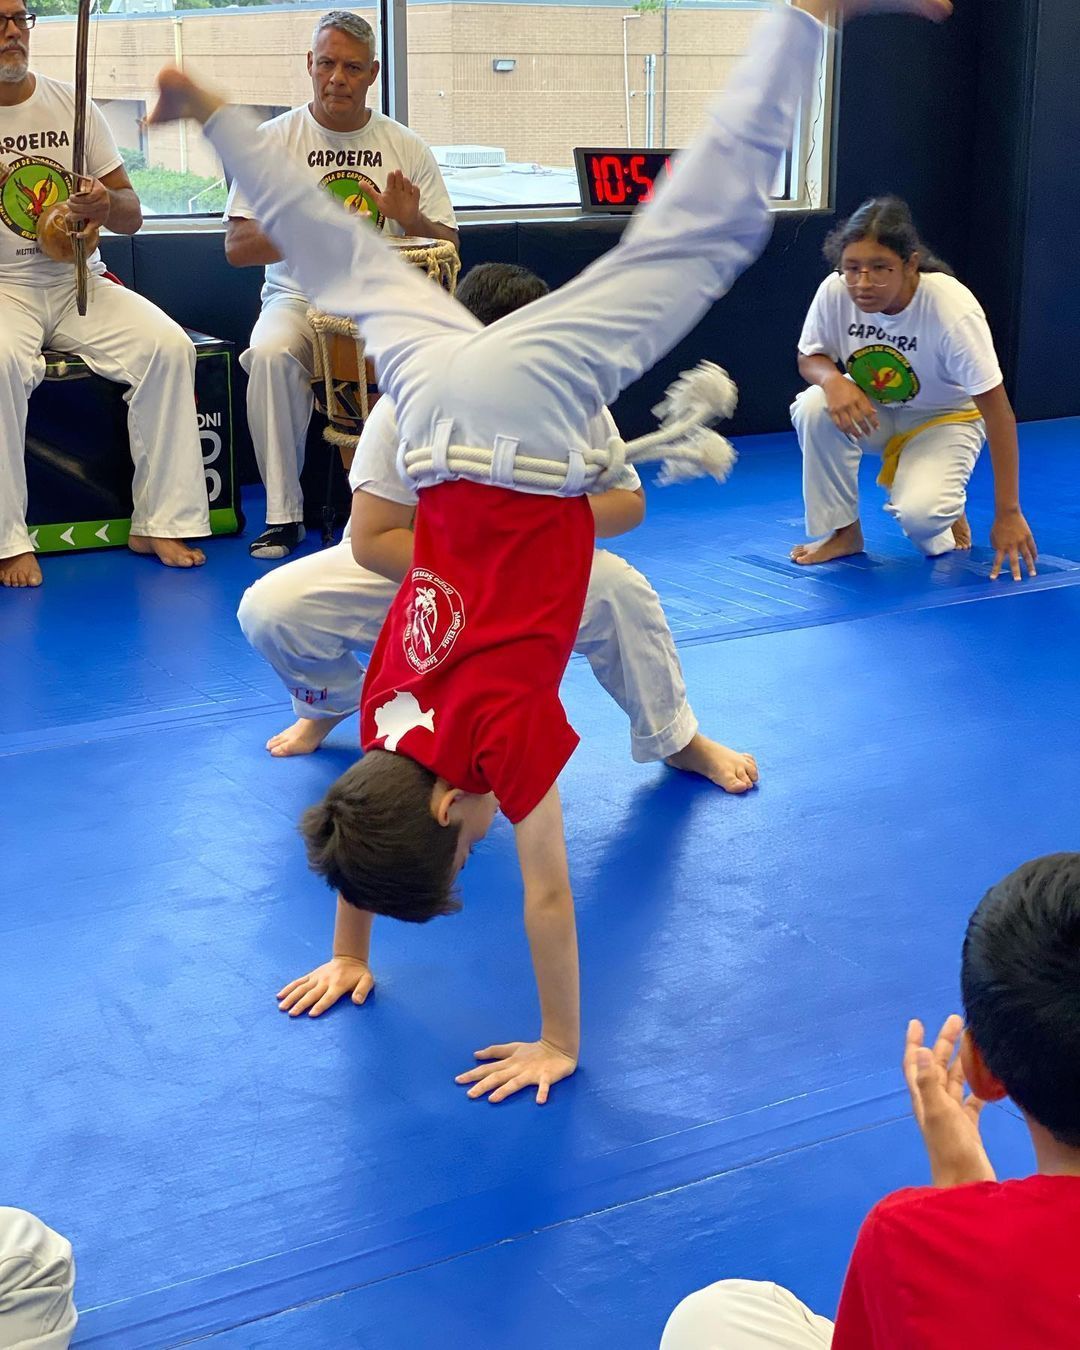 a boy in a red shirt is doing a handstand on a blue mat